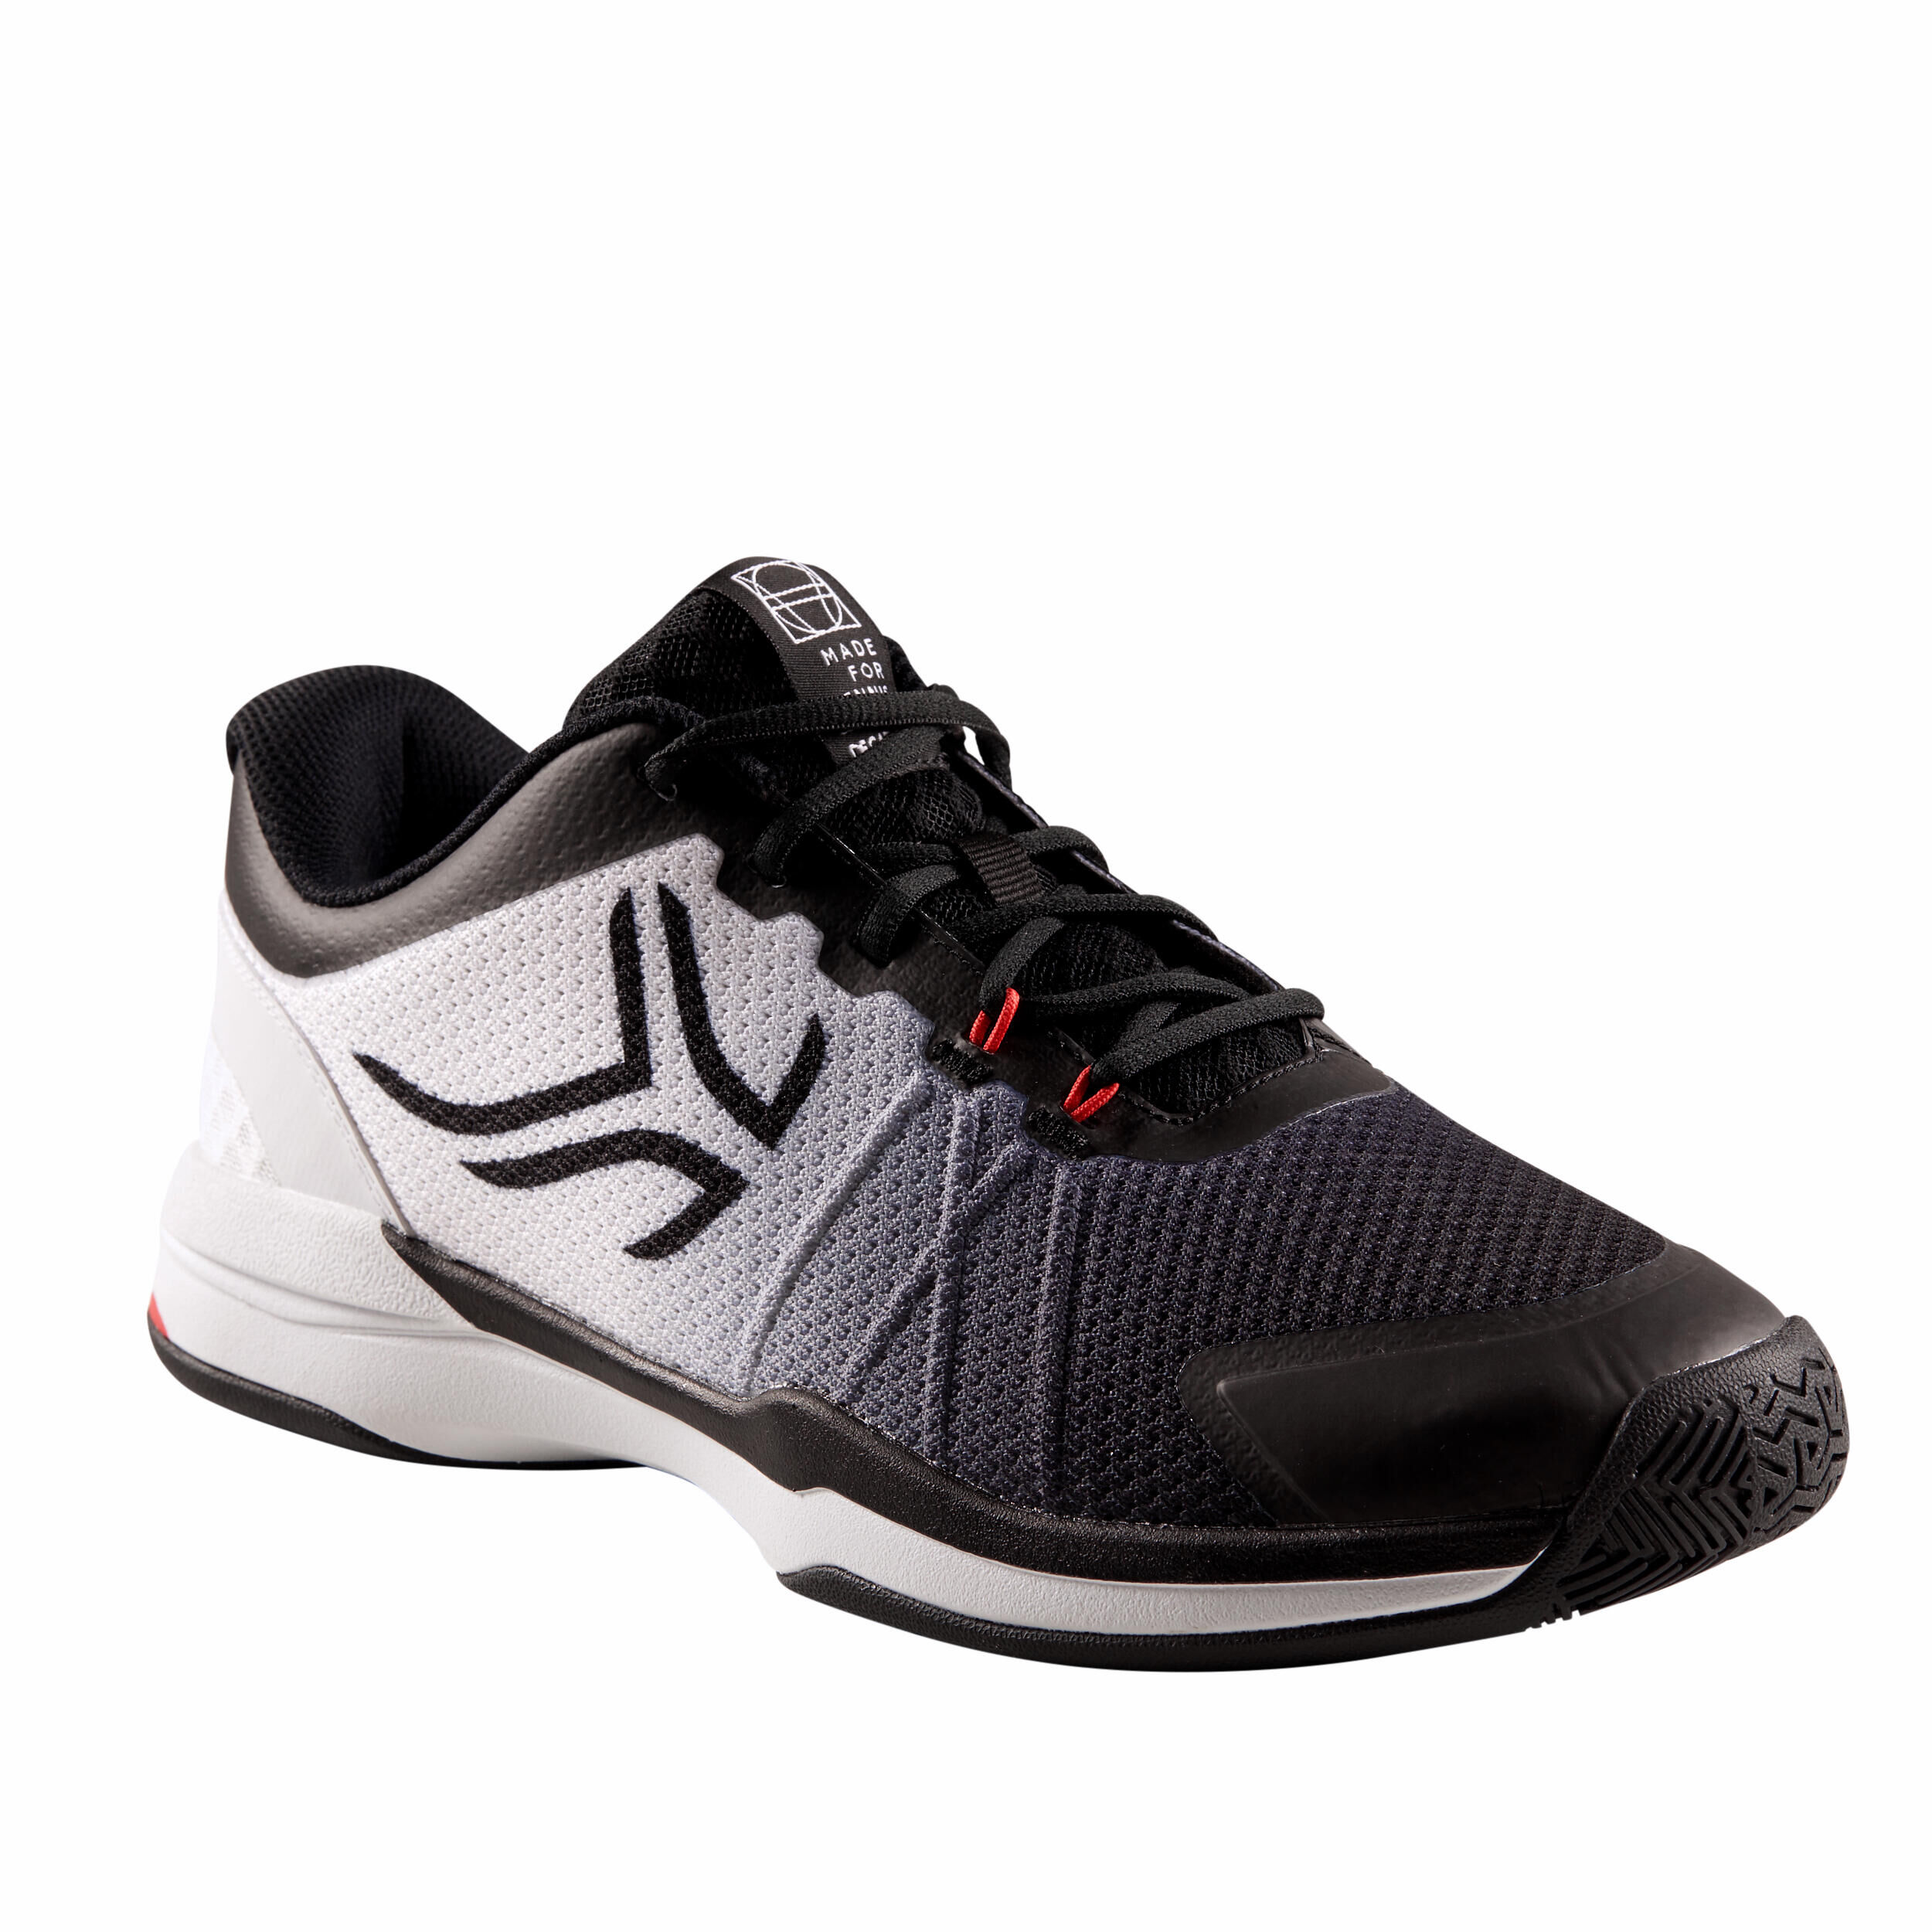 ARTENGO Men's Multi-Court Tennis Shoes TS590 - White/Black